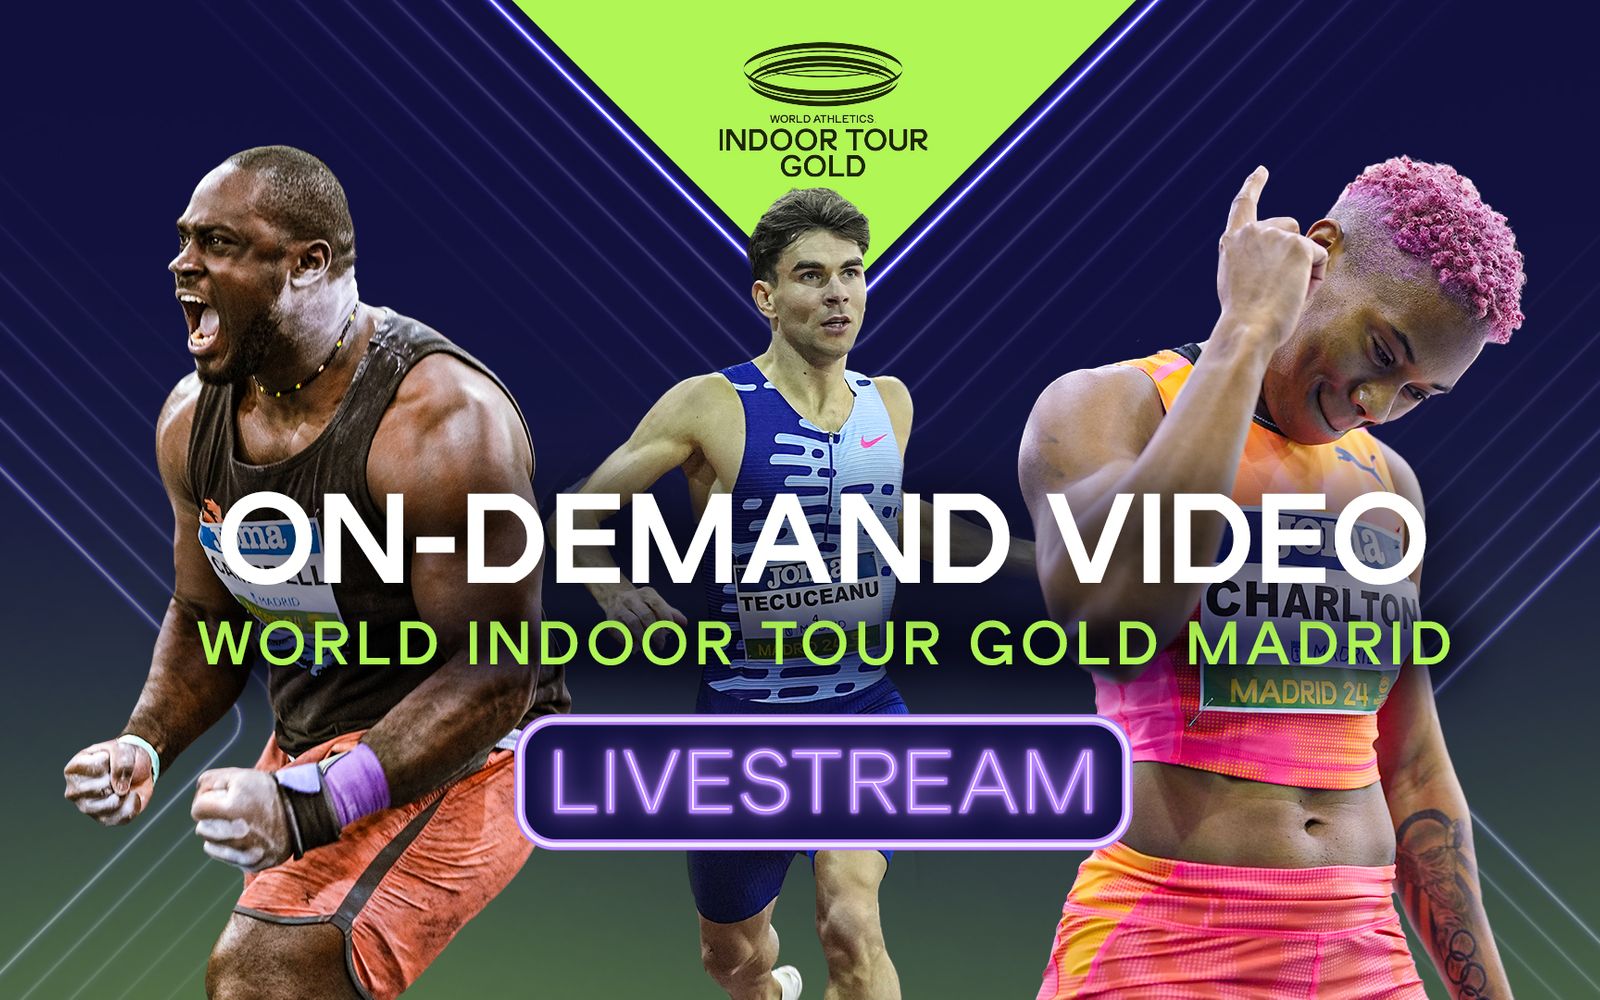 World Indoor Tour on demand video